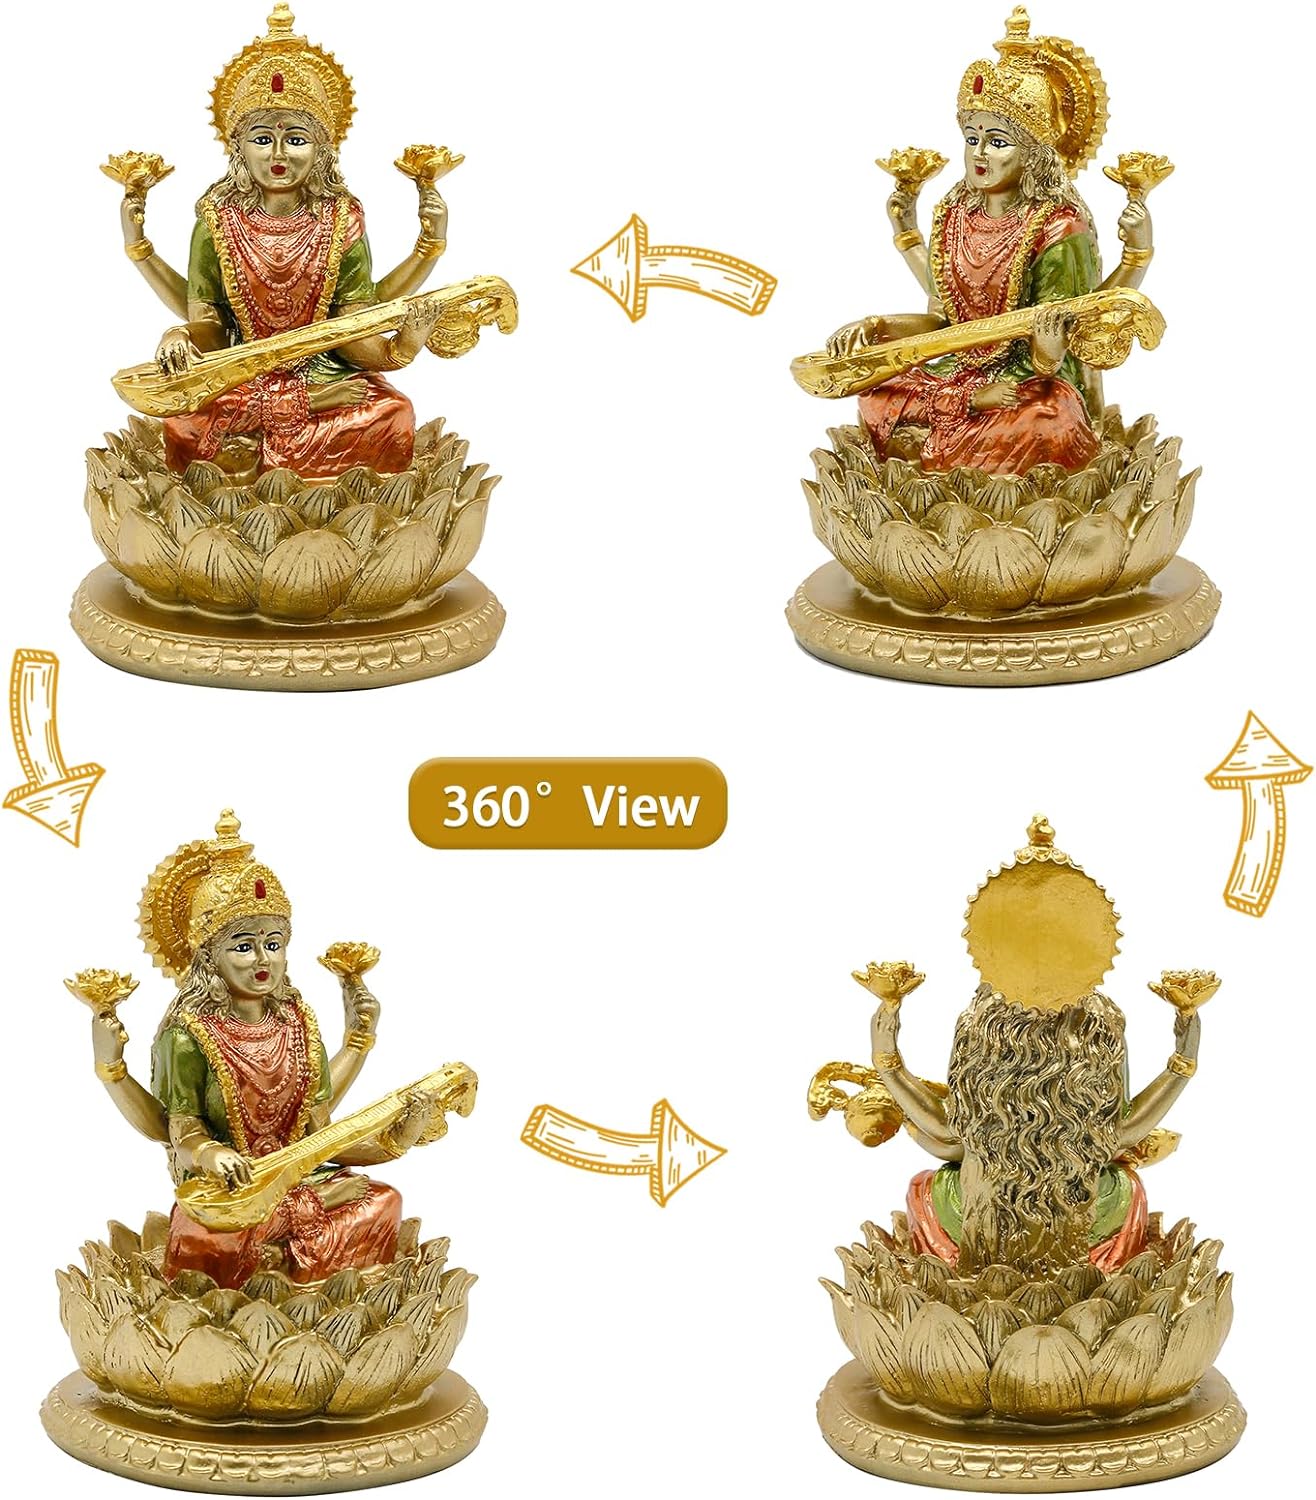 alikiki 6.5 H Sarswati Sitting on Lotus Figurines in Antique Gold Hindu God Staute for Home Office Mandir Altar Pooja Item Indian Saraswati Idol Statue for Diwali Puja Gifts